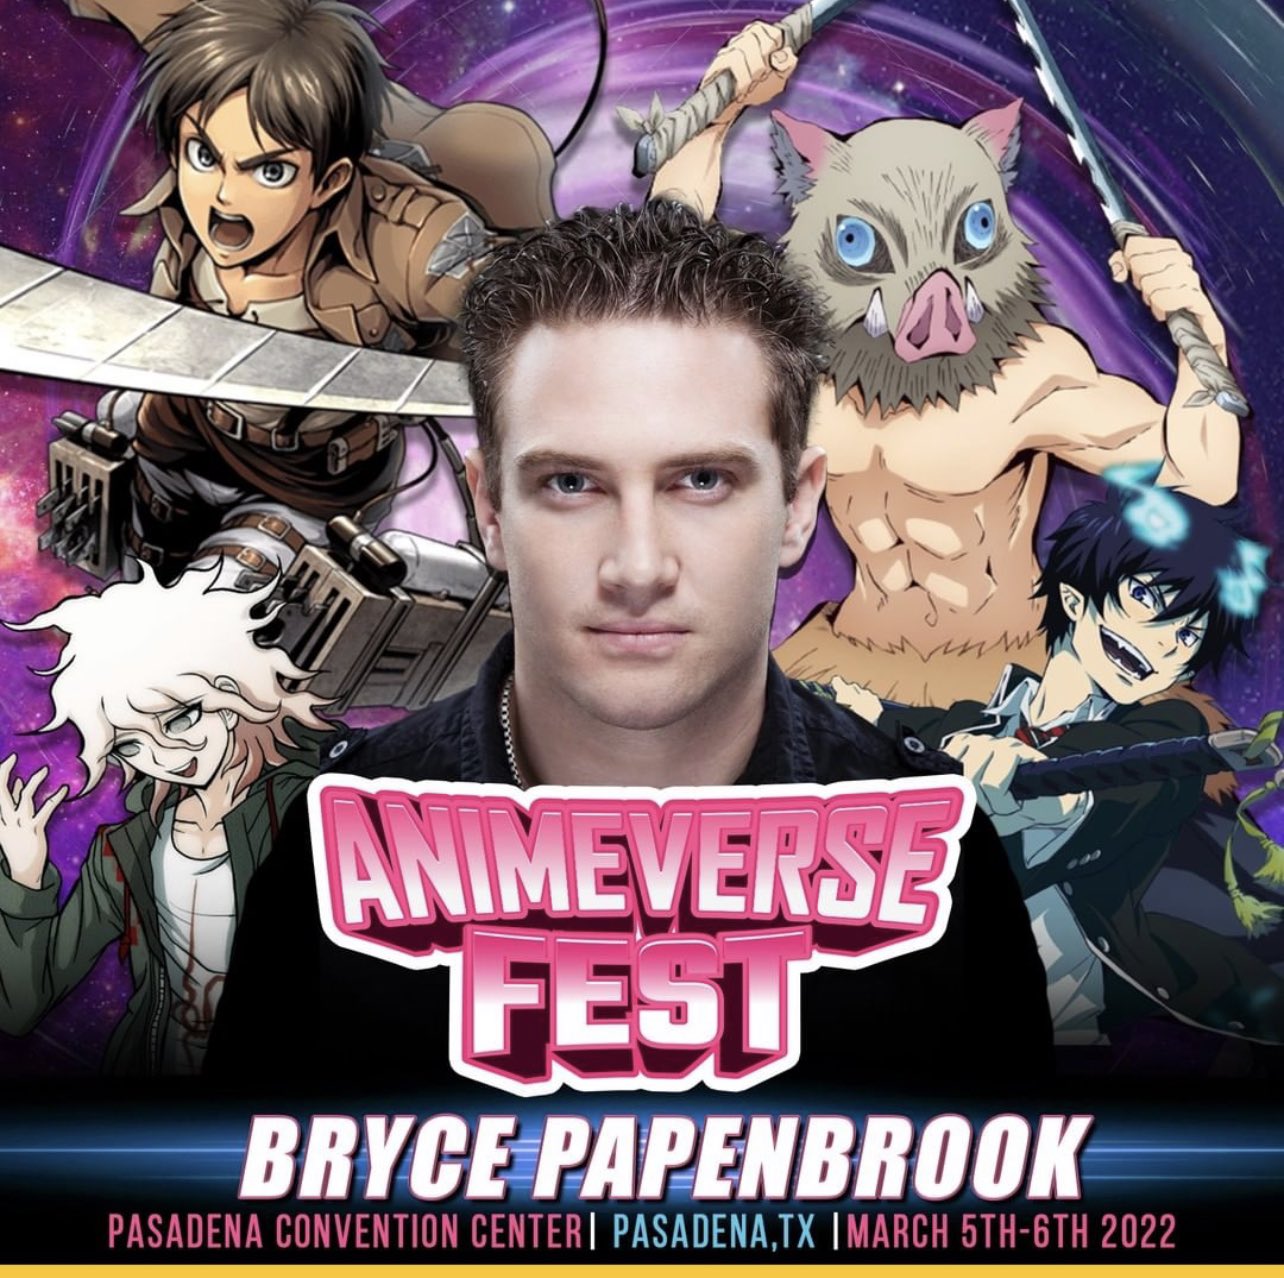 animeversefest animeversefest  Instagram photos and videos